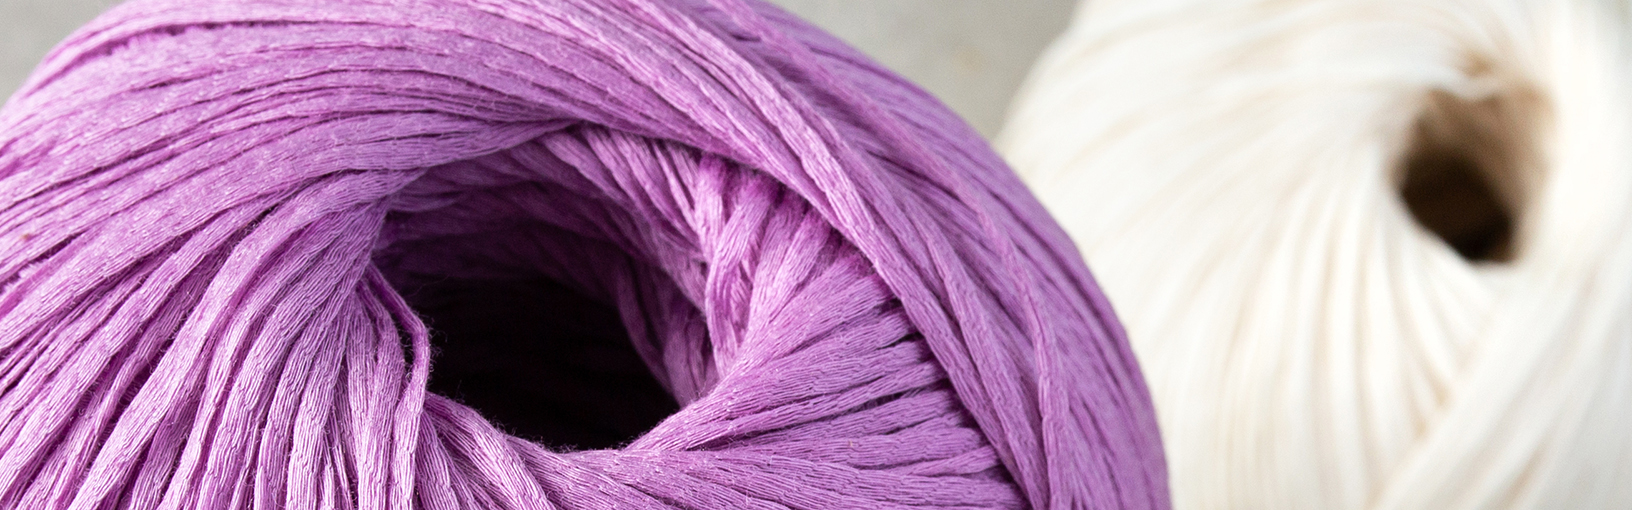 INNOVATIVE, ERGONOMIC - HIGHEST QUALITY Lana Grossa Needles | NEEDLE SETS | Crochet hook sets